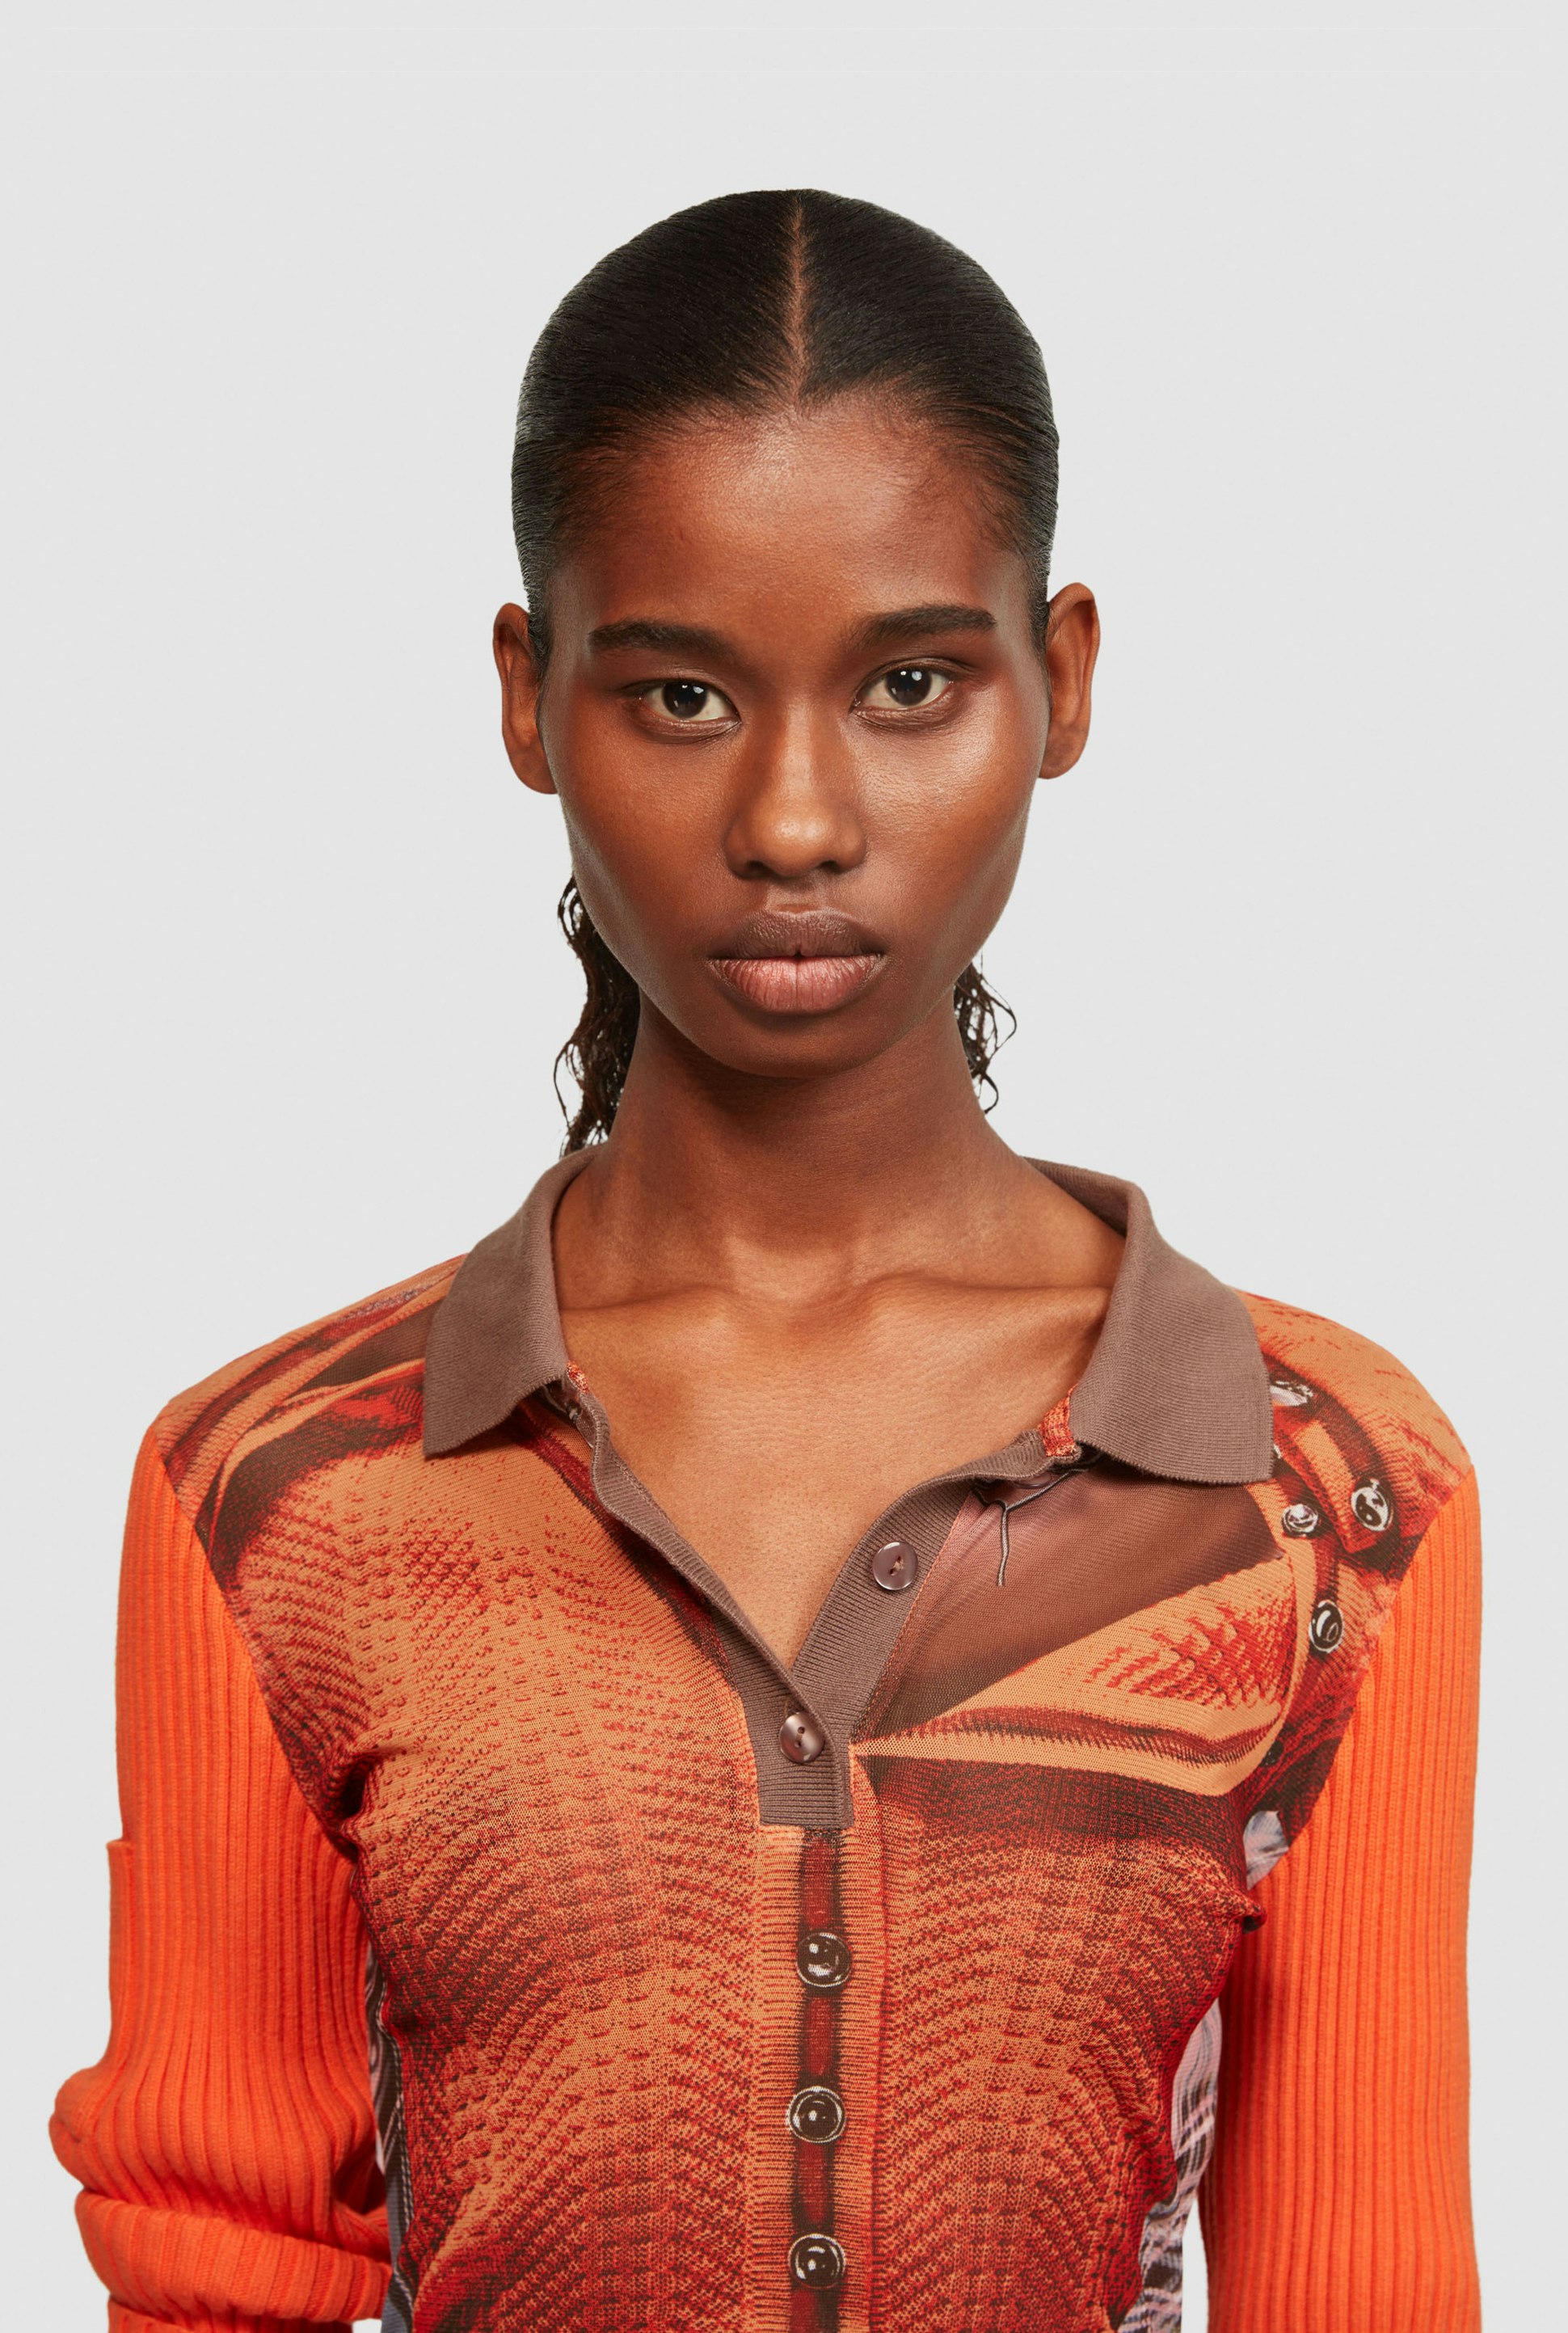 The Orange trompe-l'œil ruffle neck knit Dress